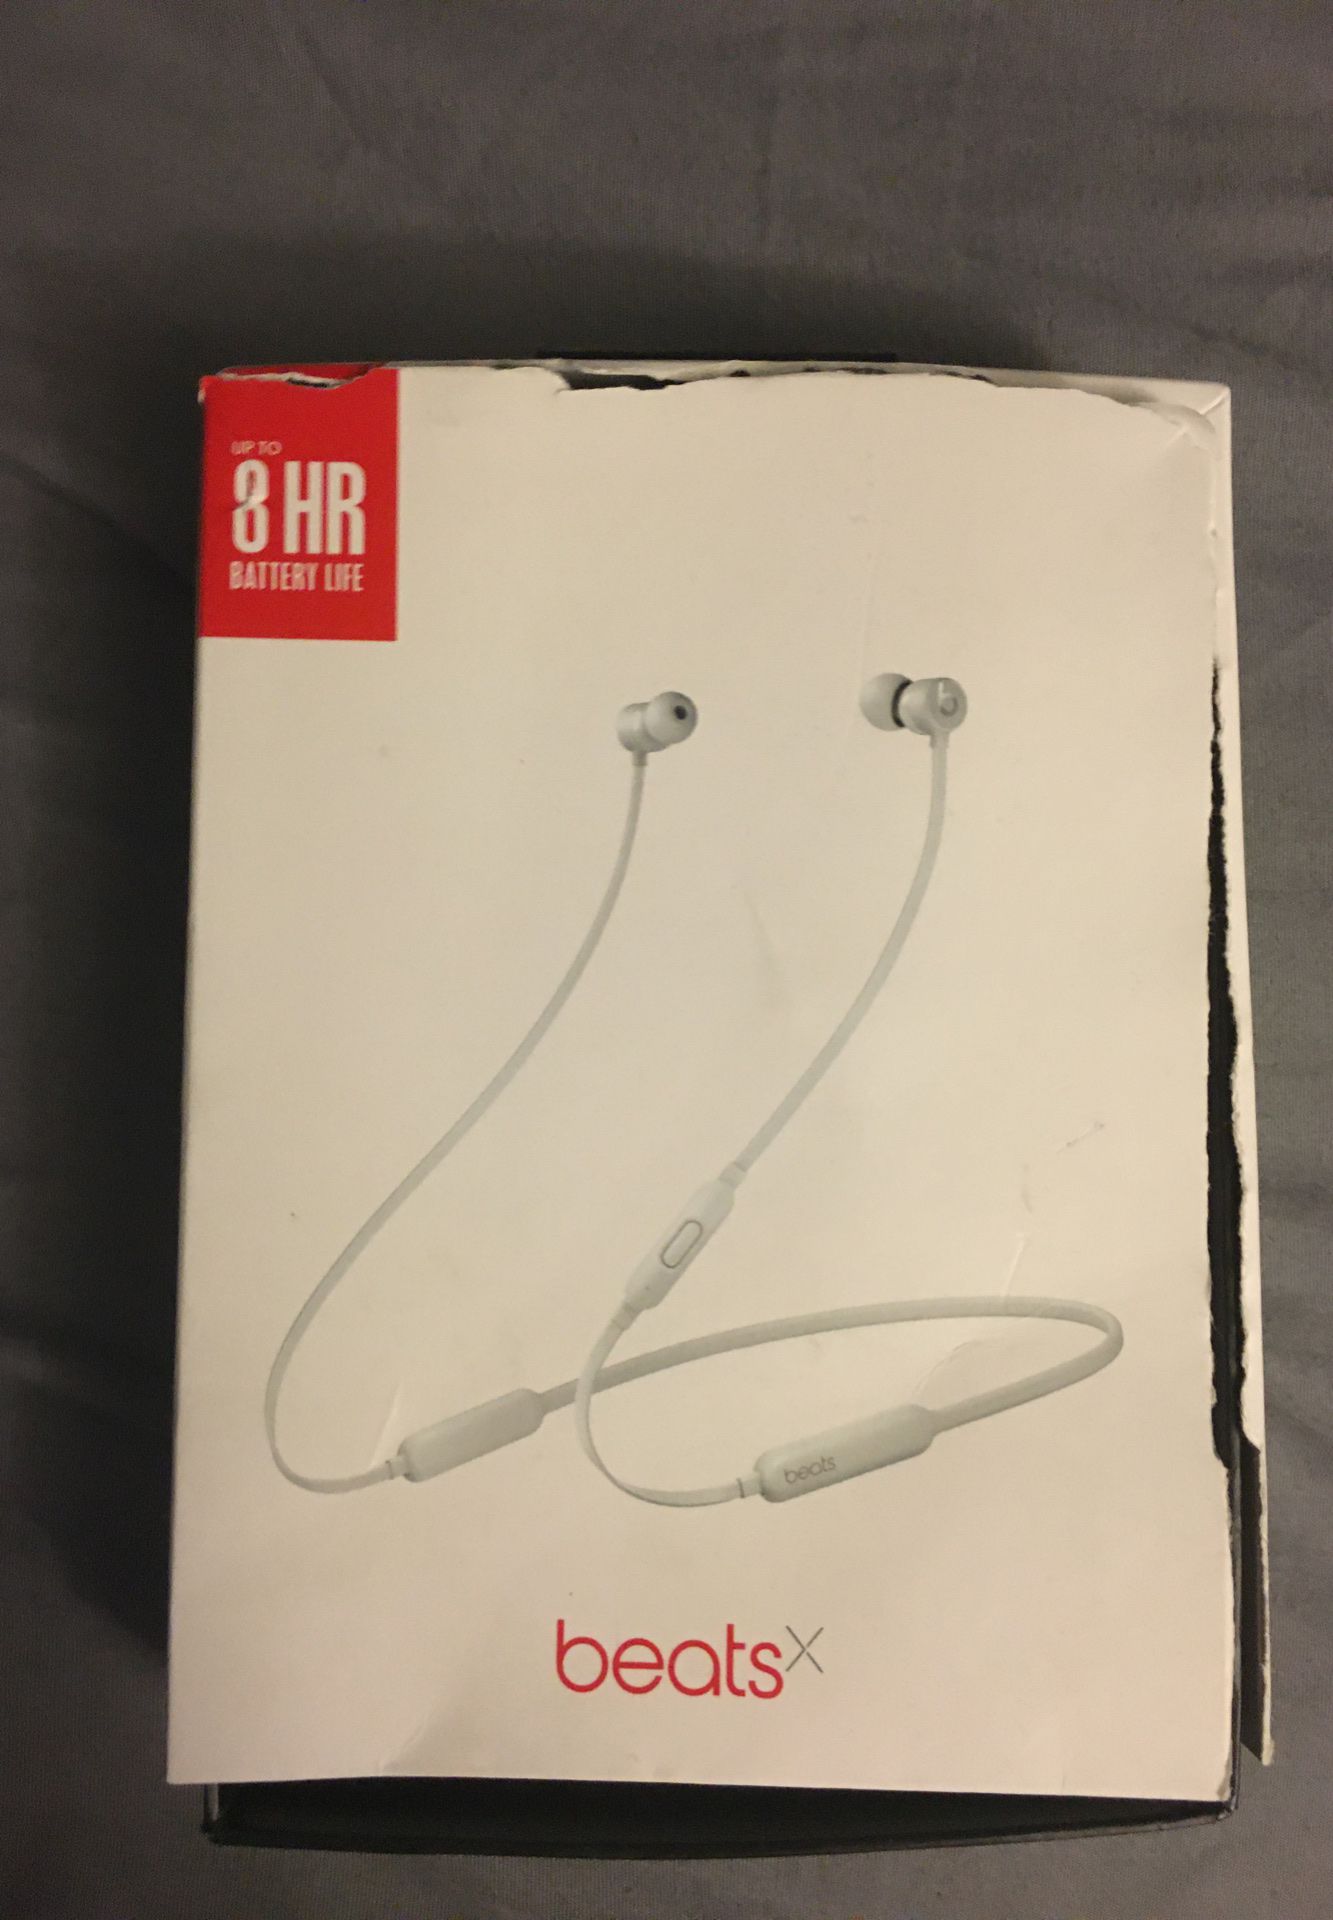 Beats x by Dre Bluetooth headphones